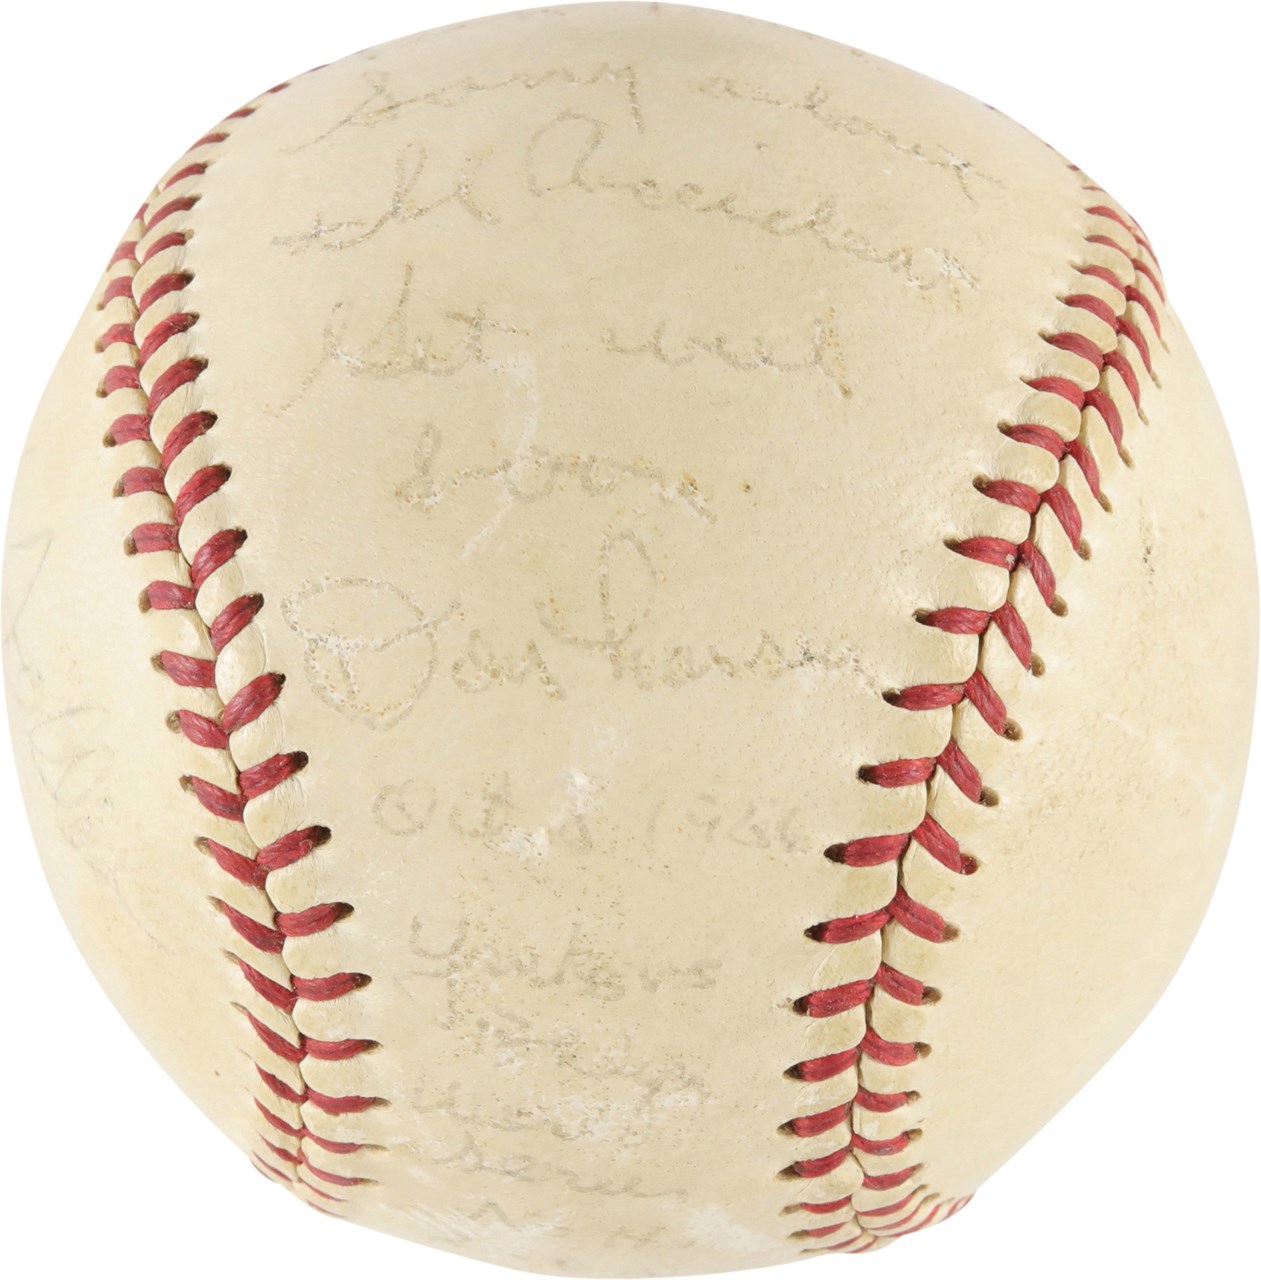 1956 Don Larsen World Series Perfect Game Used Baseball w/Great Provenance (PSA)